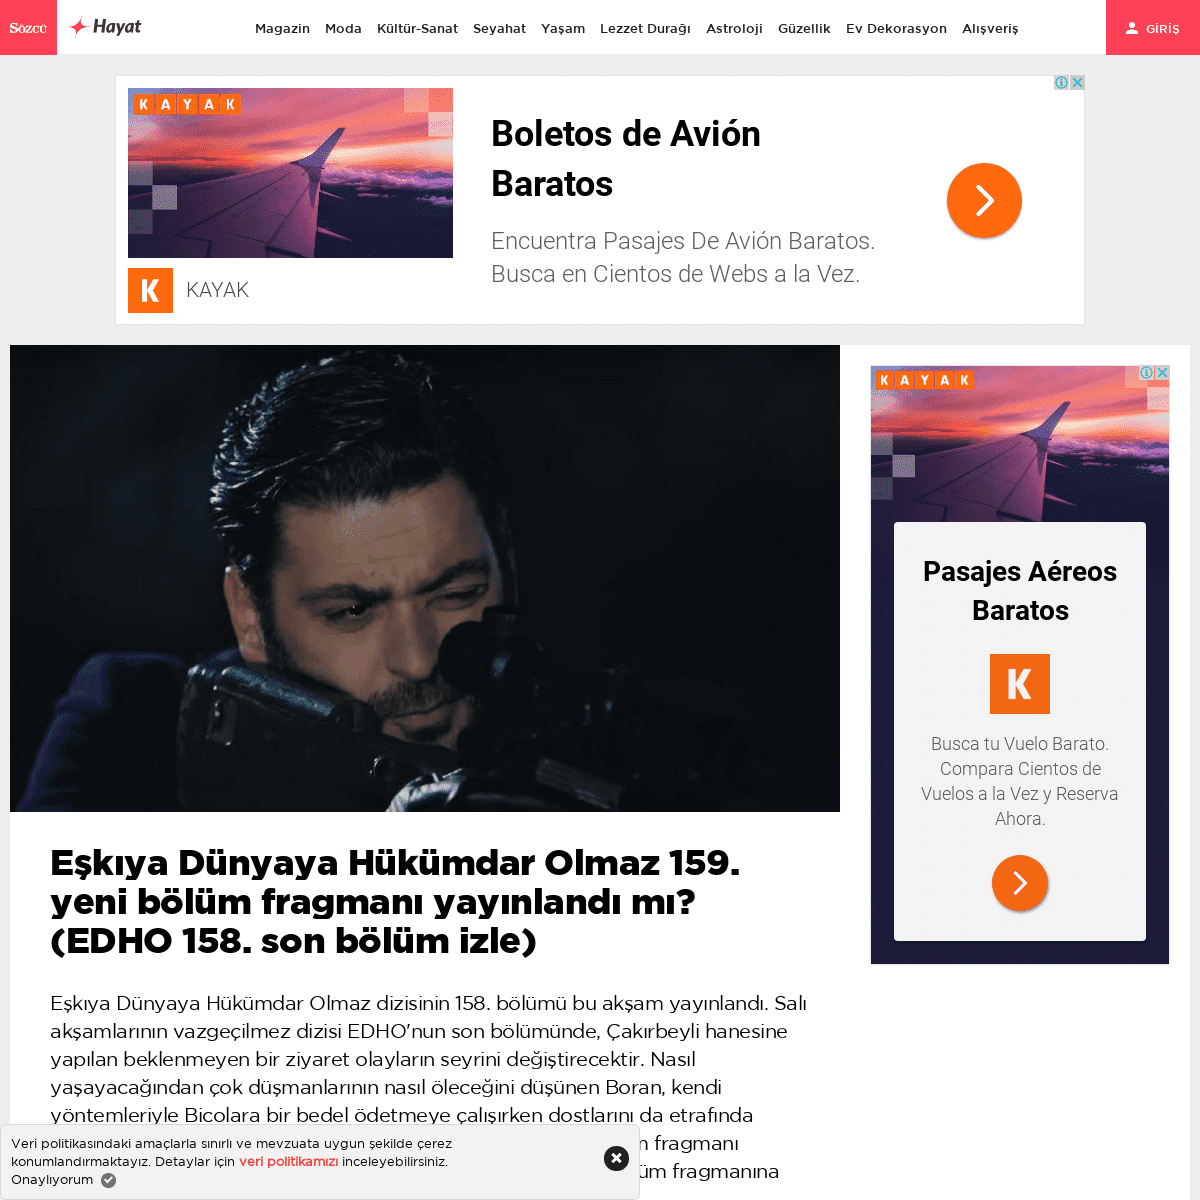 A complete backup of www.sozcu.com.tr/hayatim/magazin-haberleri/eskiya-dunyaya-hukumdar-olmaz-159-yeni-bolum-fragmani-yayinlandi